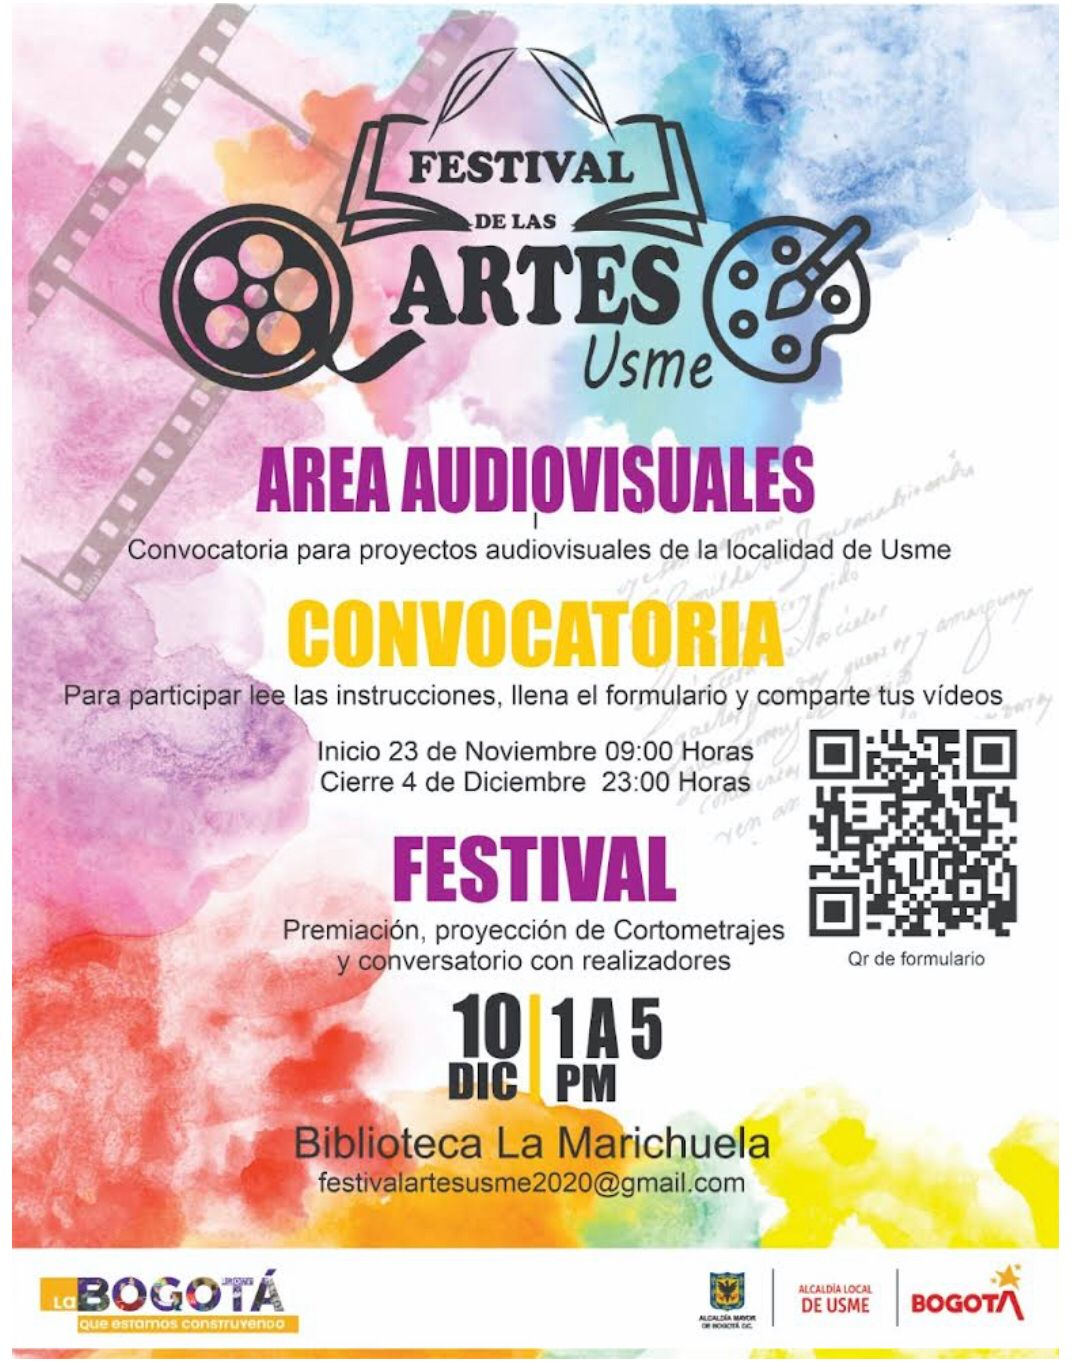 Convocatoria Festival de las Artes: Área Audiovisuales en Usme 